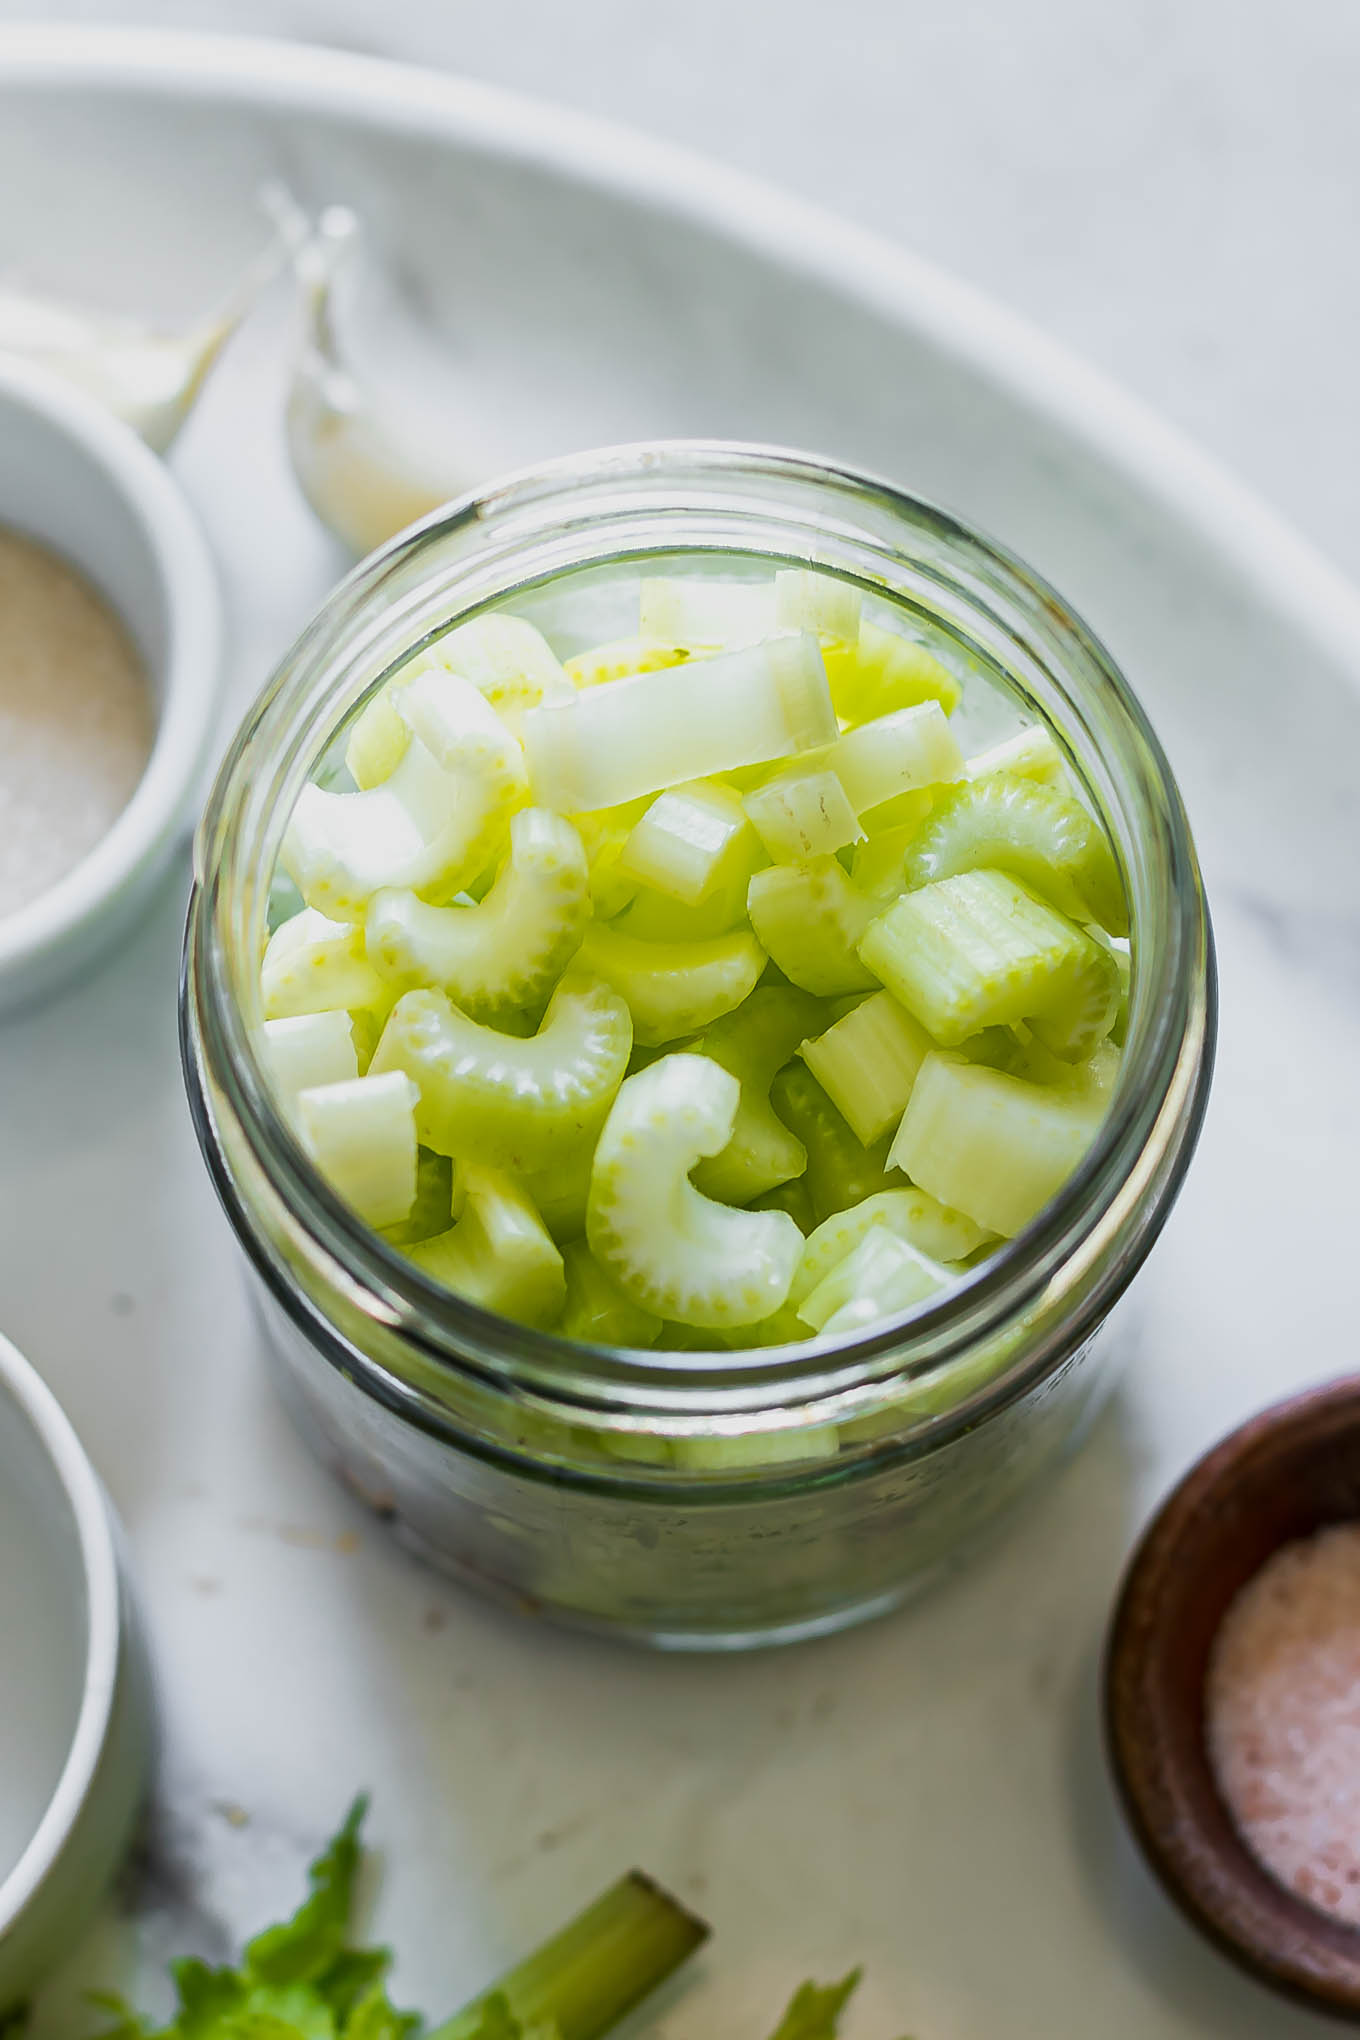 celery slices in a jar before pickling